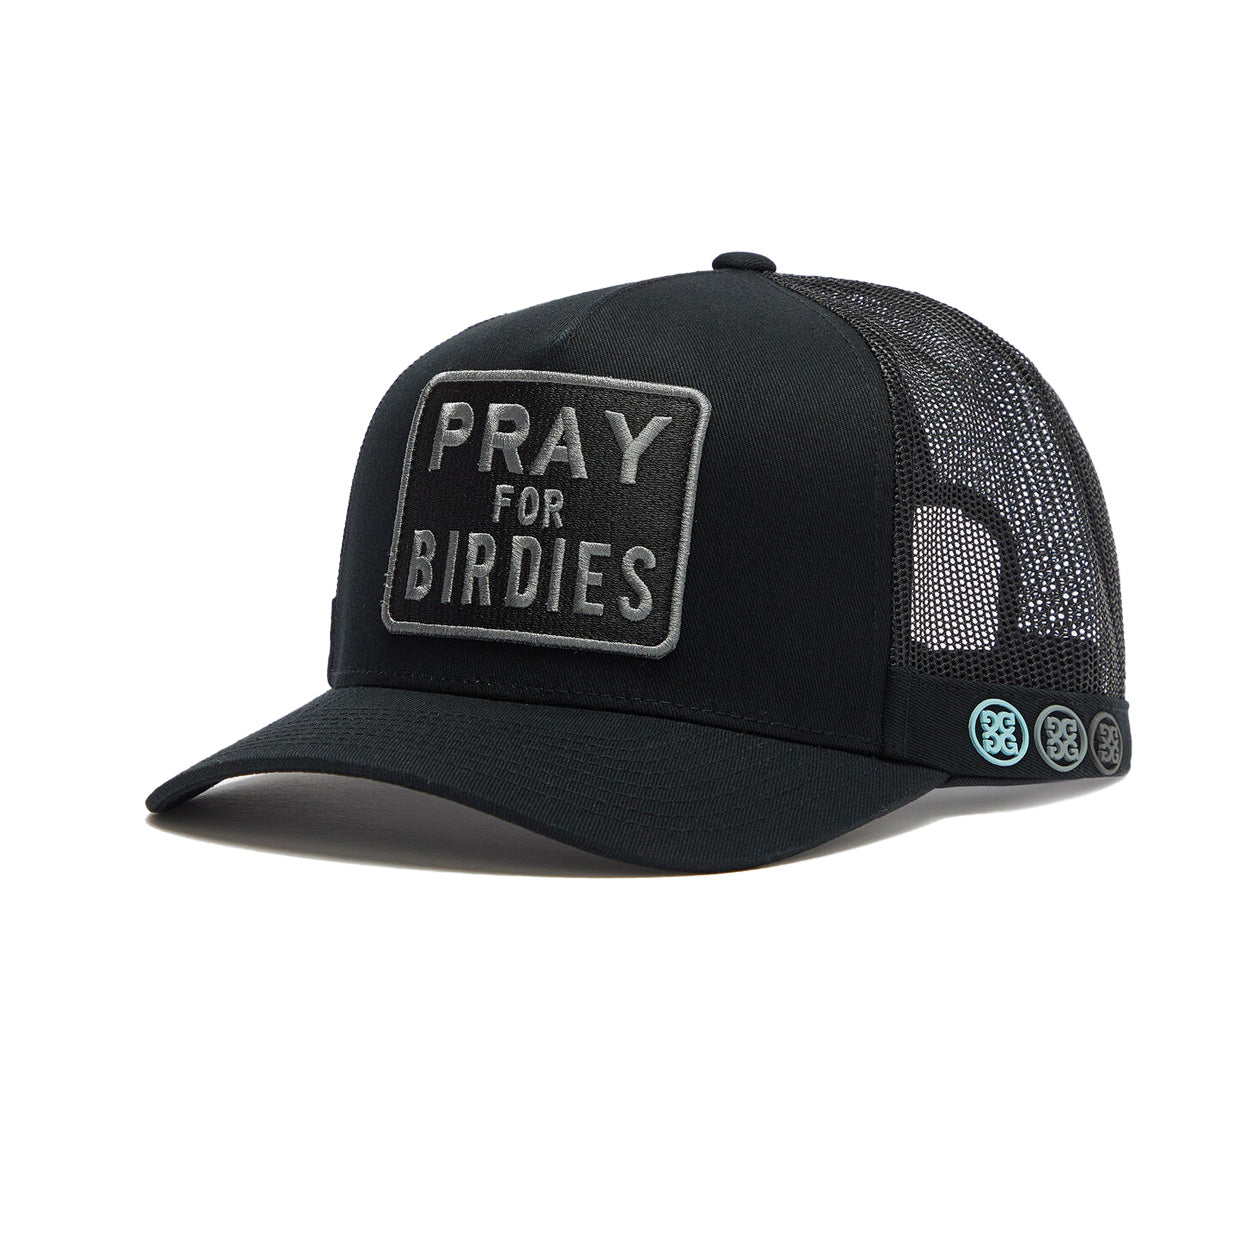 PRAY FOR BIRDIES INTERLOCK KNIT TRUCKER HAT高爾夫球帽